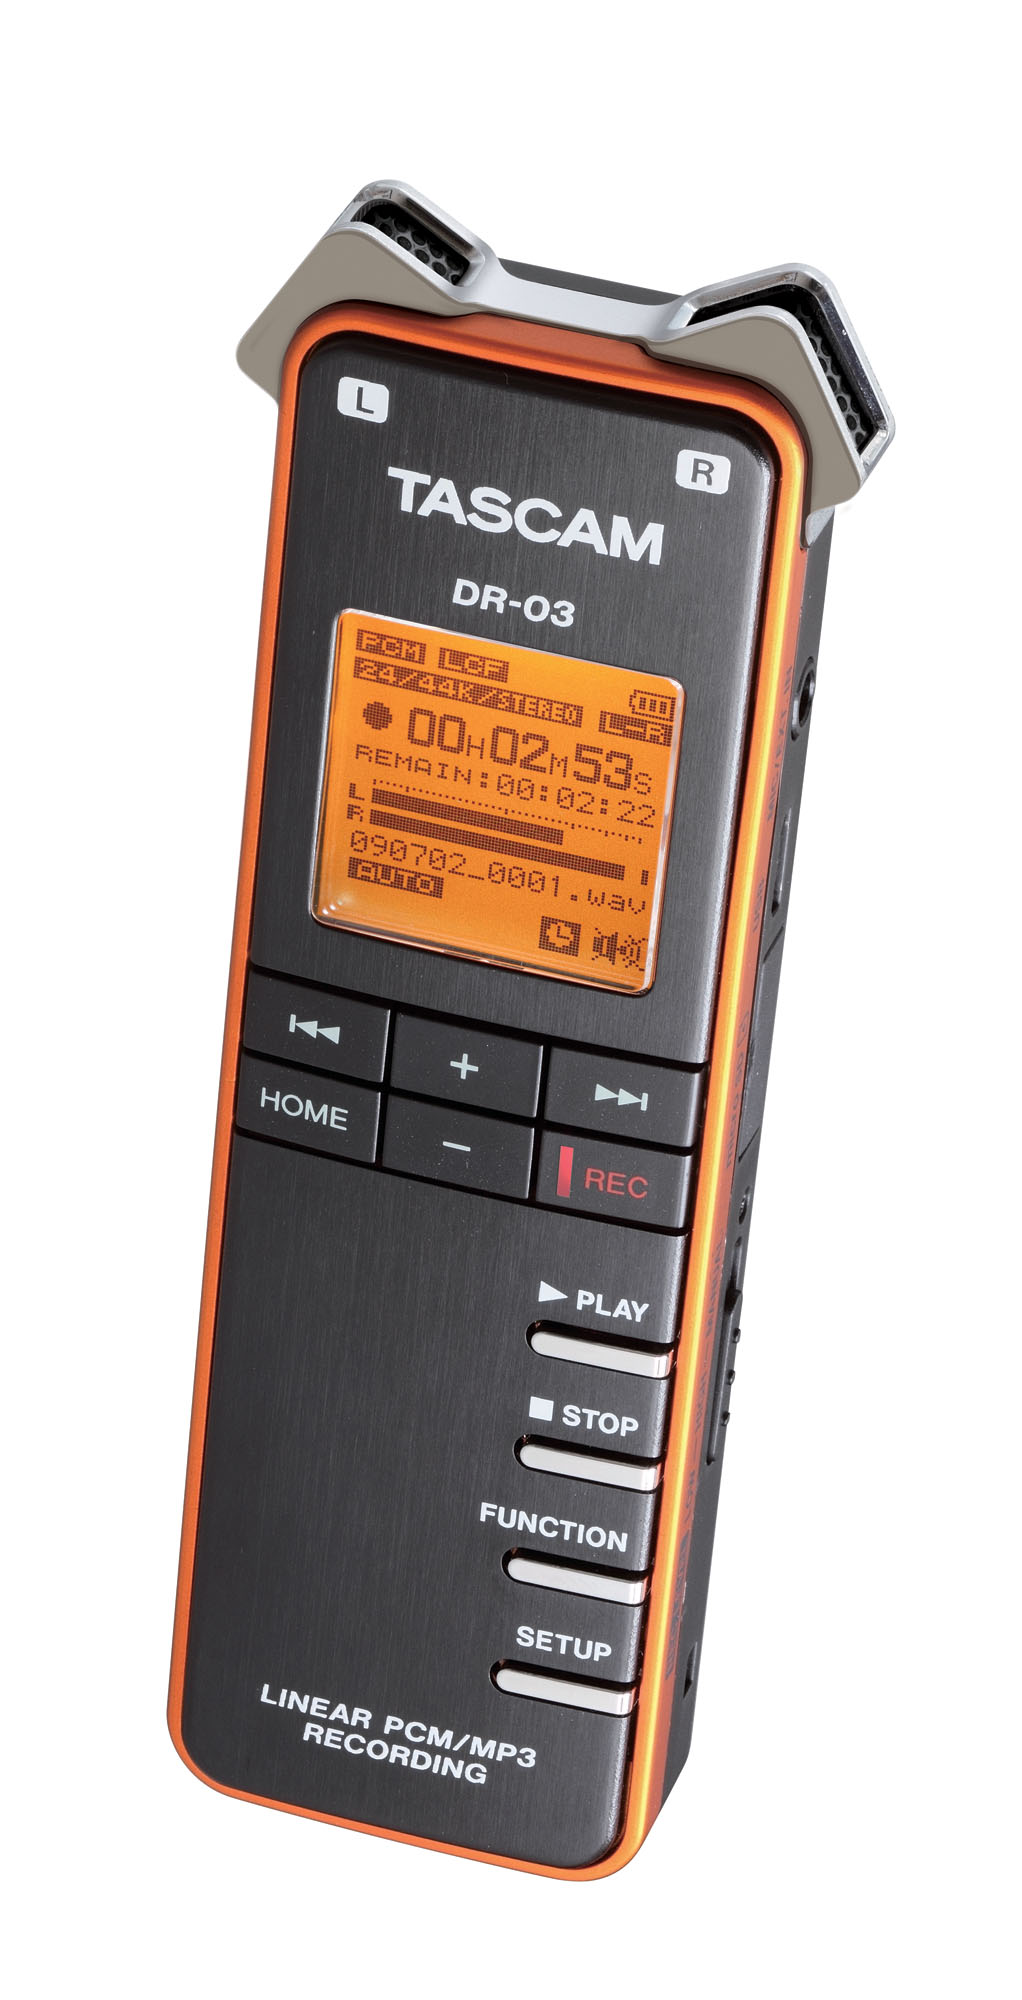 TASCAM - DR-03 - midifan：我们关注电脑音乐